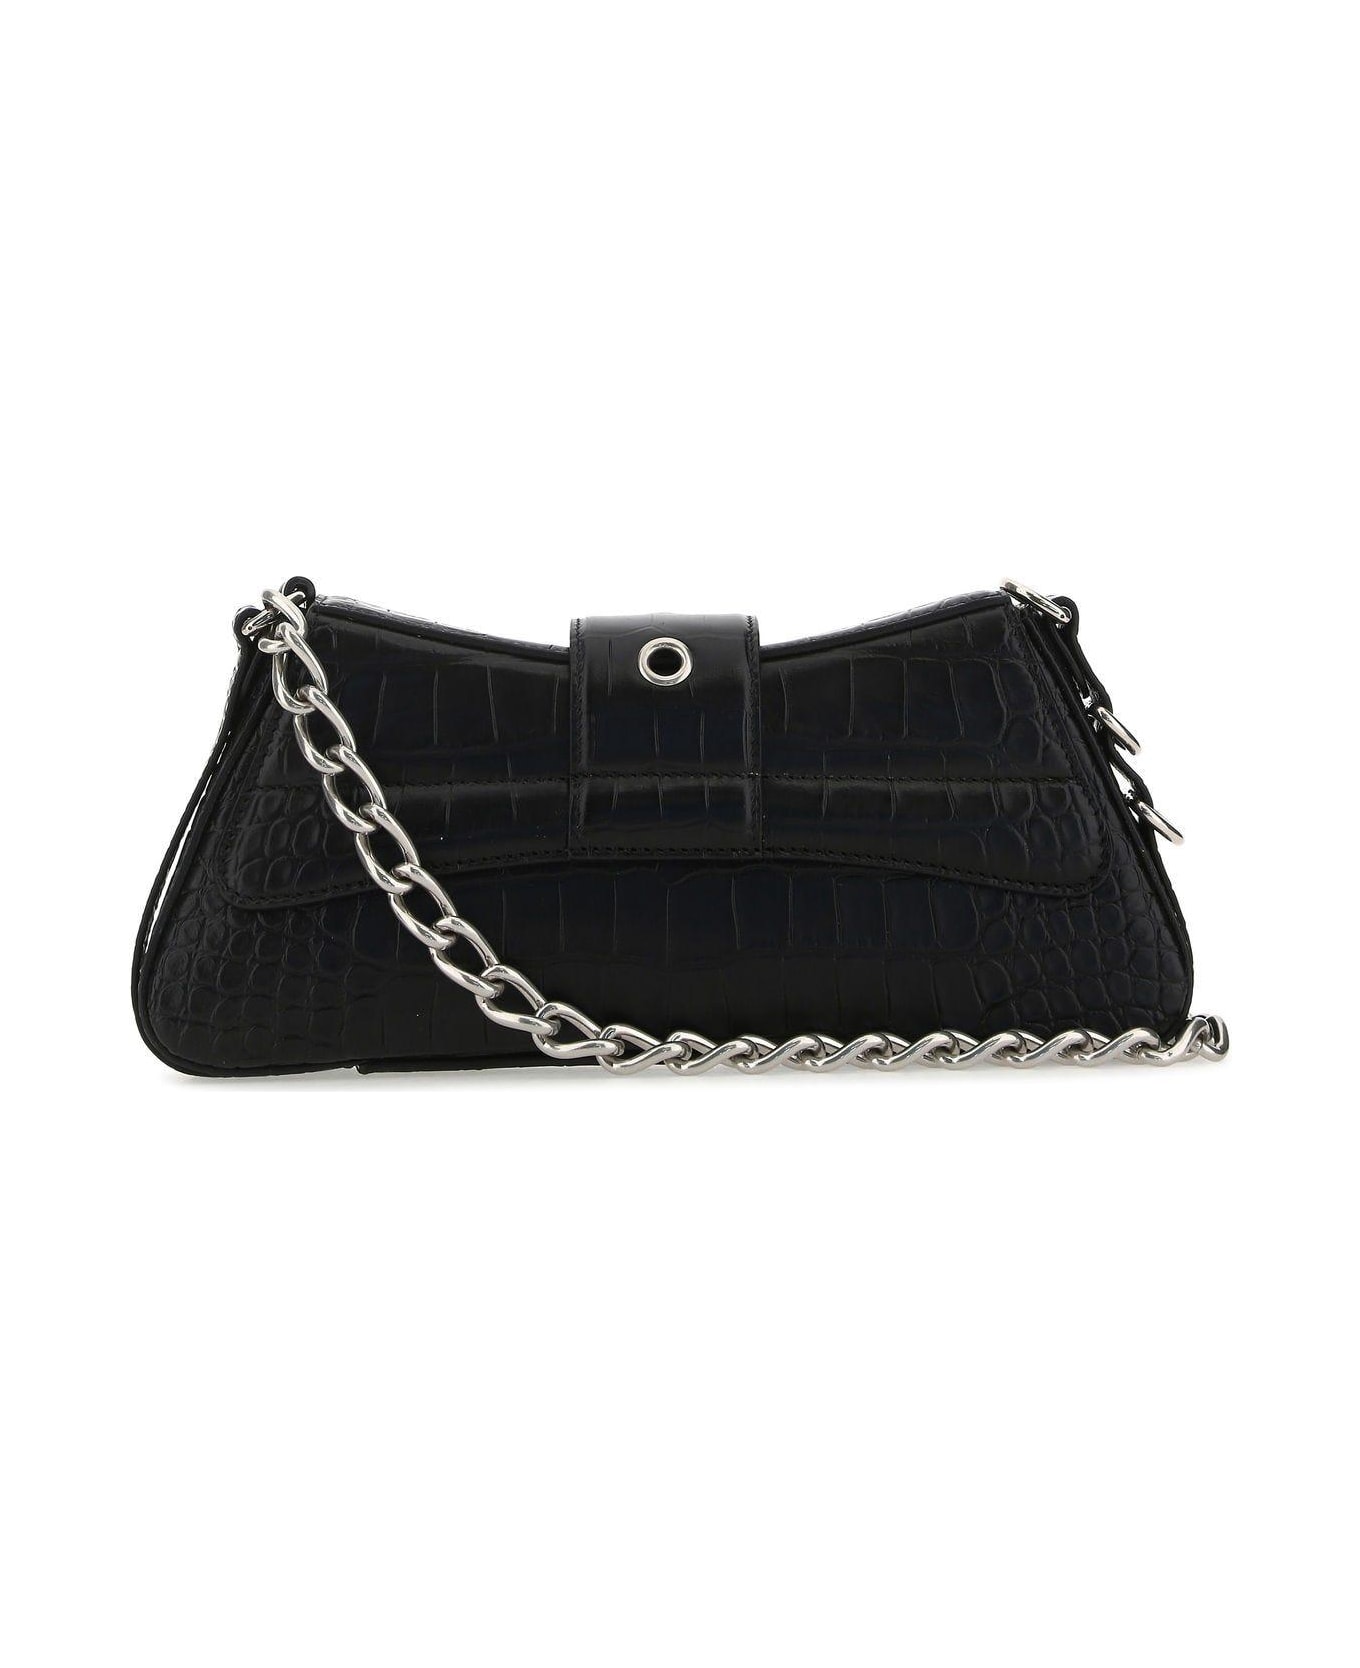 Balenciaga Black Leather Lindsay Handbag - NERO